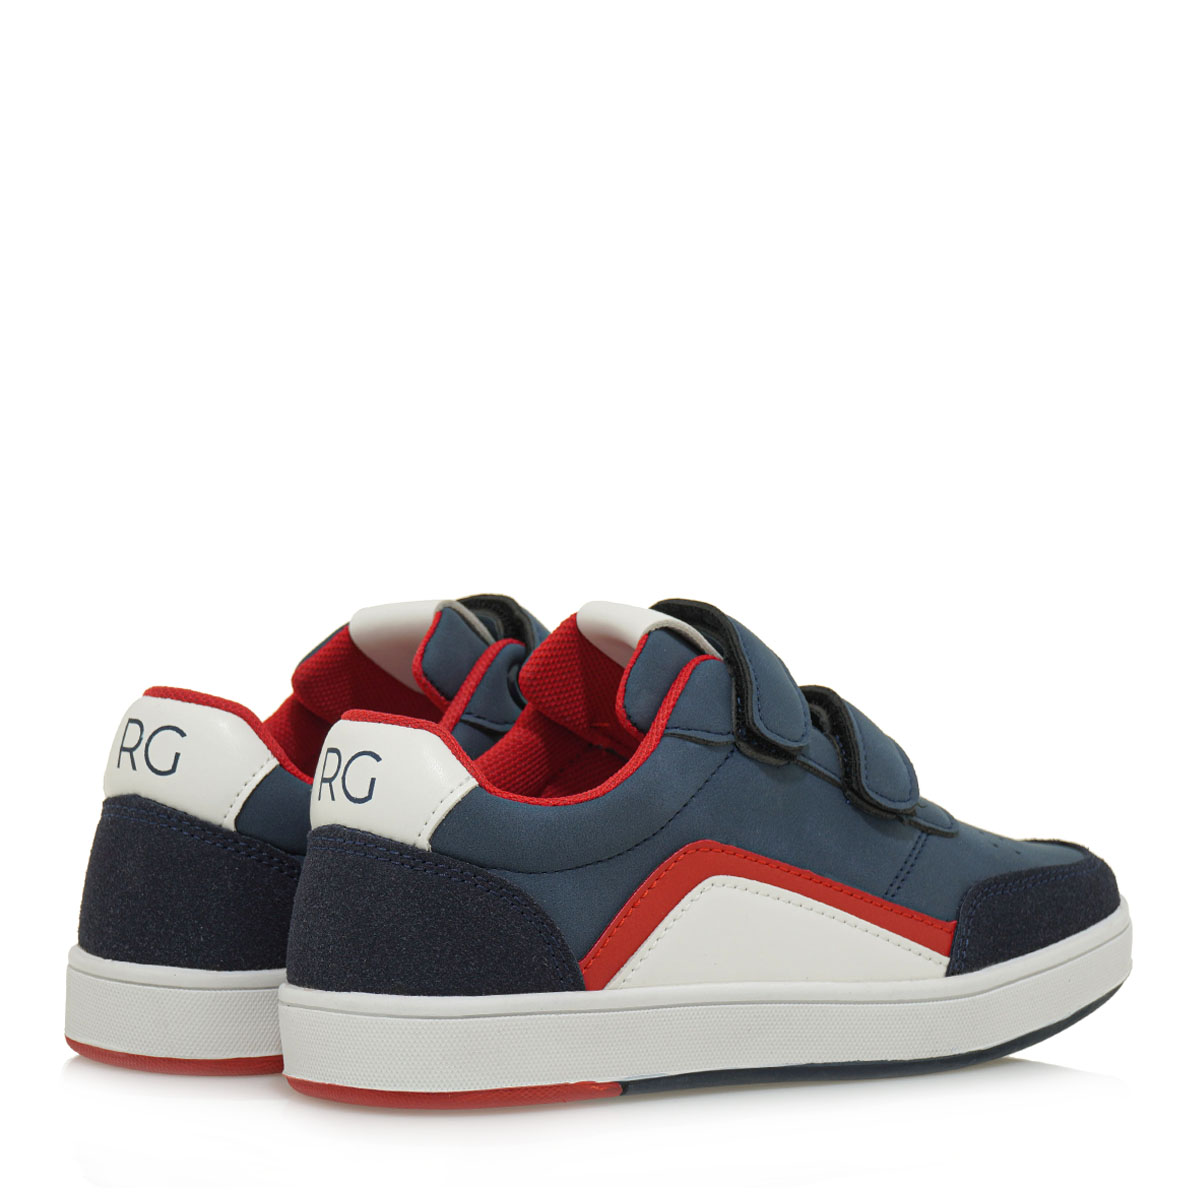 Sneaker για αγόρι σε μπλέ χρώμα Renato Garini  SΑ57Β0101053  Collection SS2024